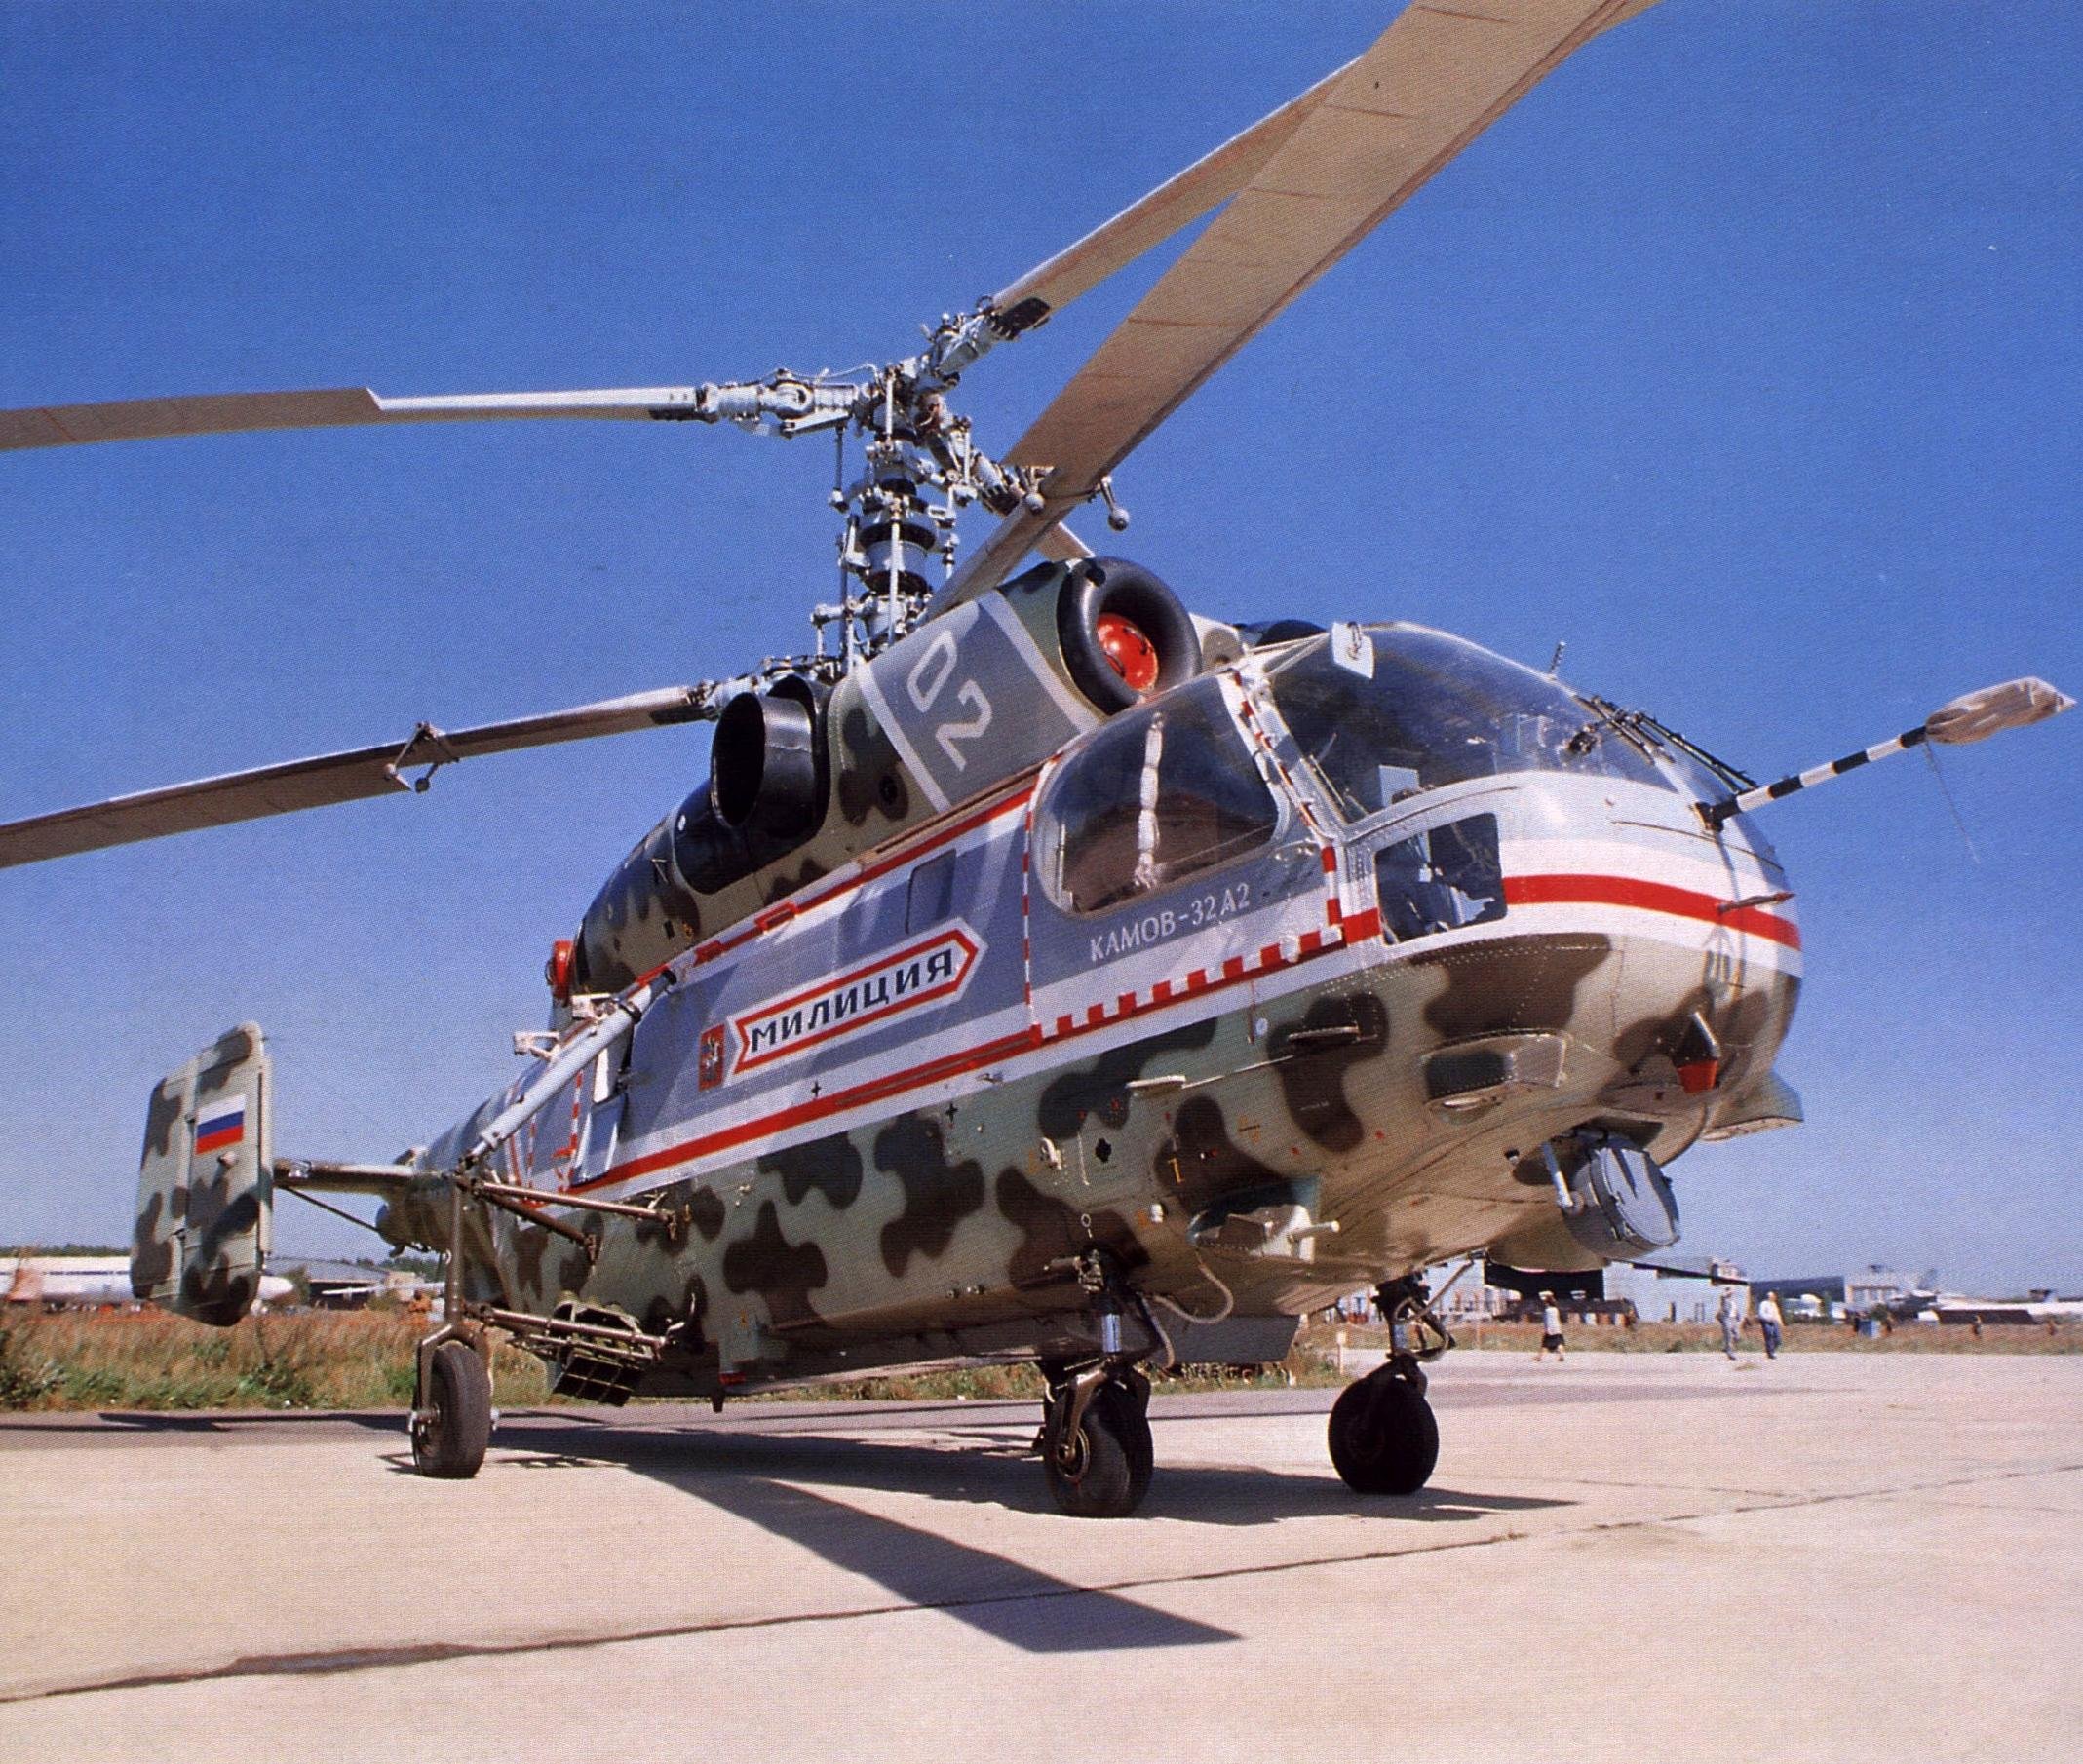 Сле ка 2. Ка-32 вертолёт. Ка-32а2. Ка-32 противолодочный вертолет. Вертолет модели ка-32а2..